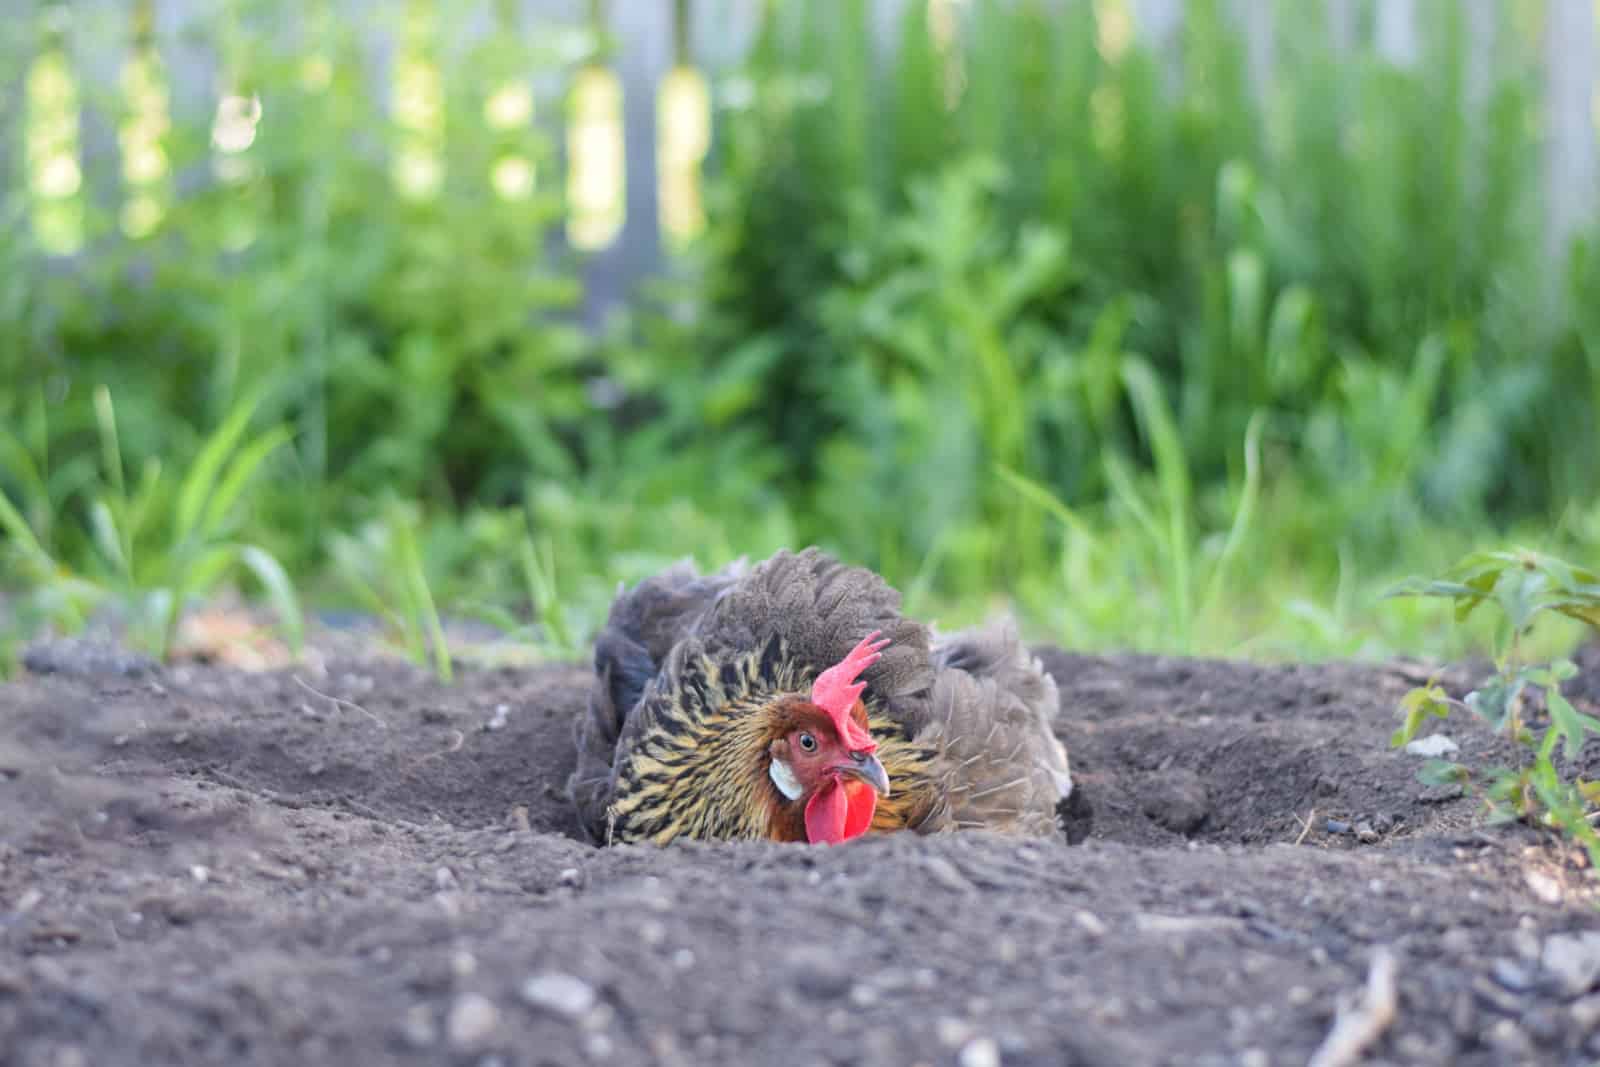 A female, brown leghorn chicken fluffed up in soil dust bathing